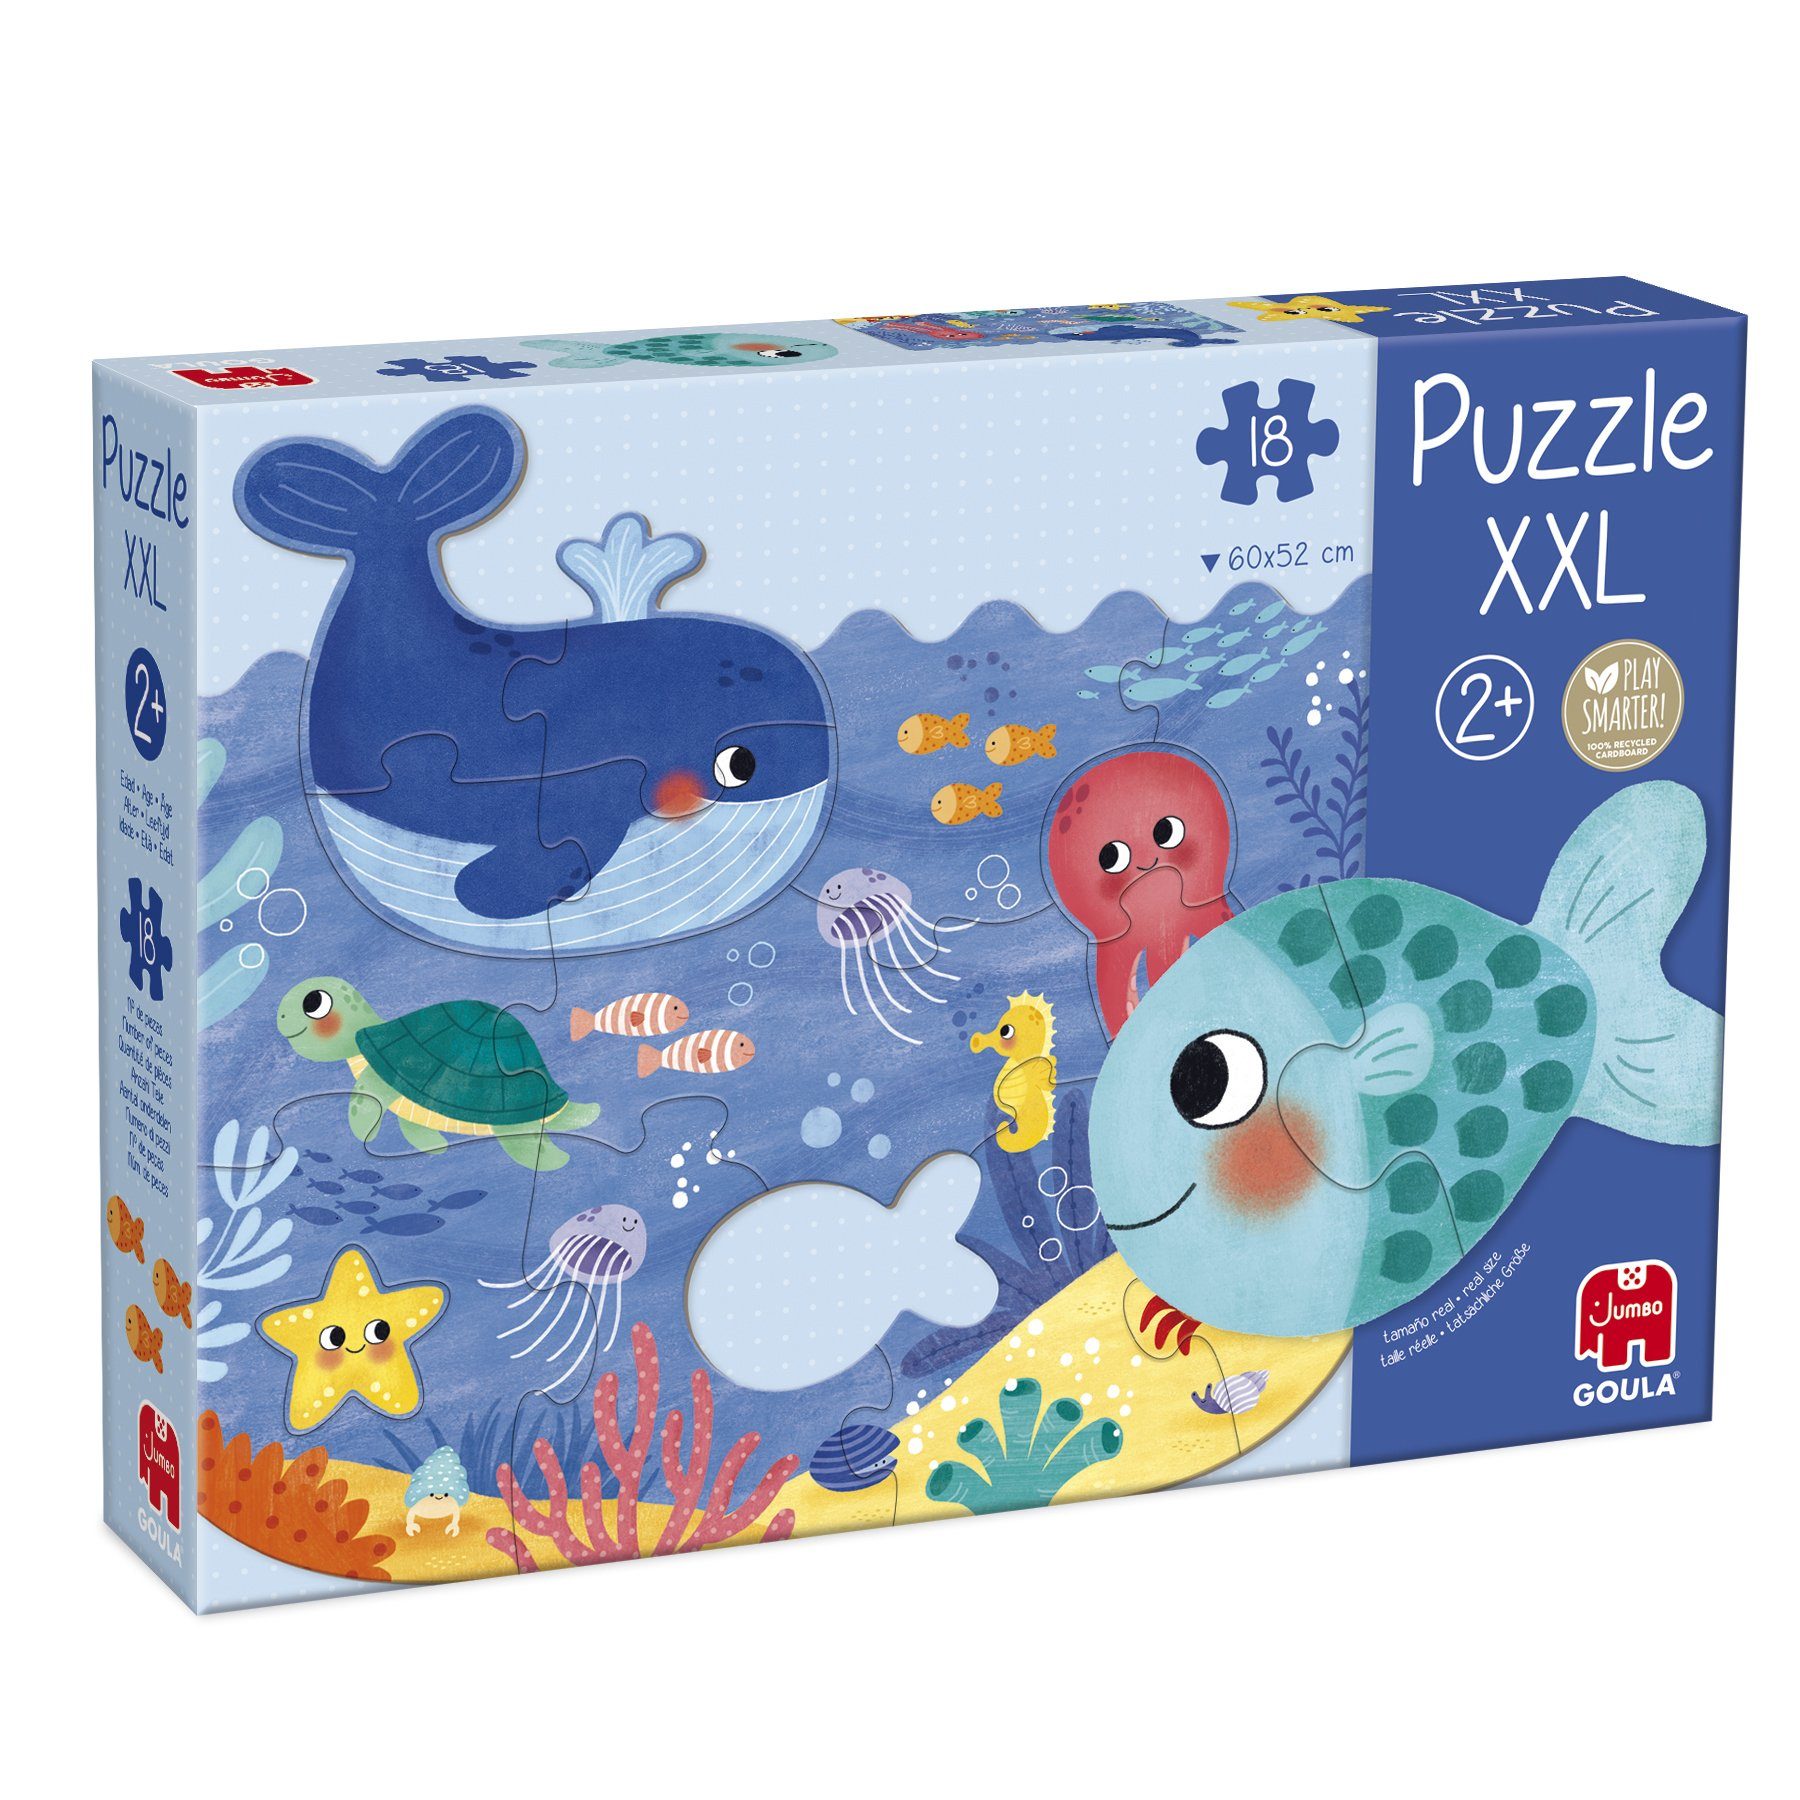 Jumbo Spiele Goula Puzzle Goula 1120700014 Ozean 18 Teile XXL Puzzle, 18 Puzzleteile, Made in Europe | Puzzle